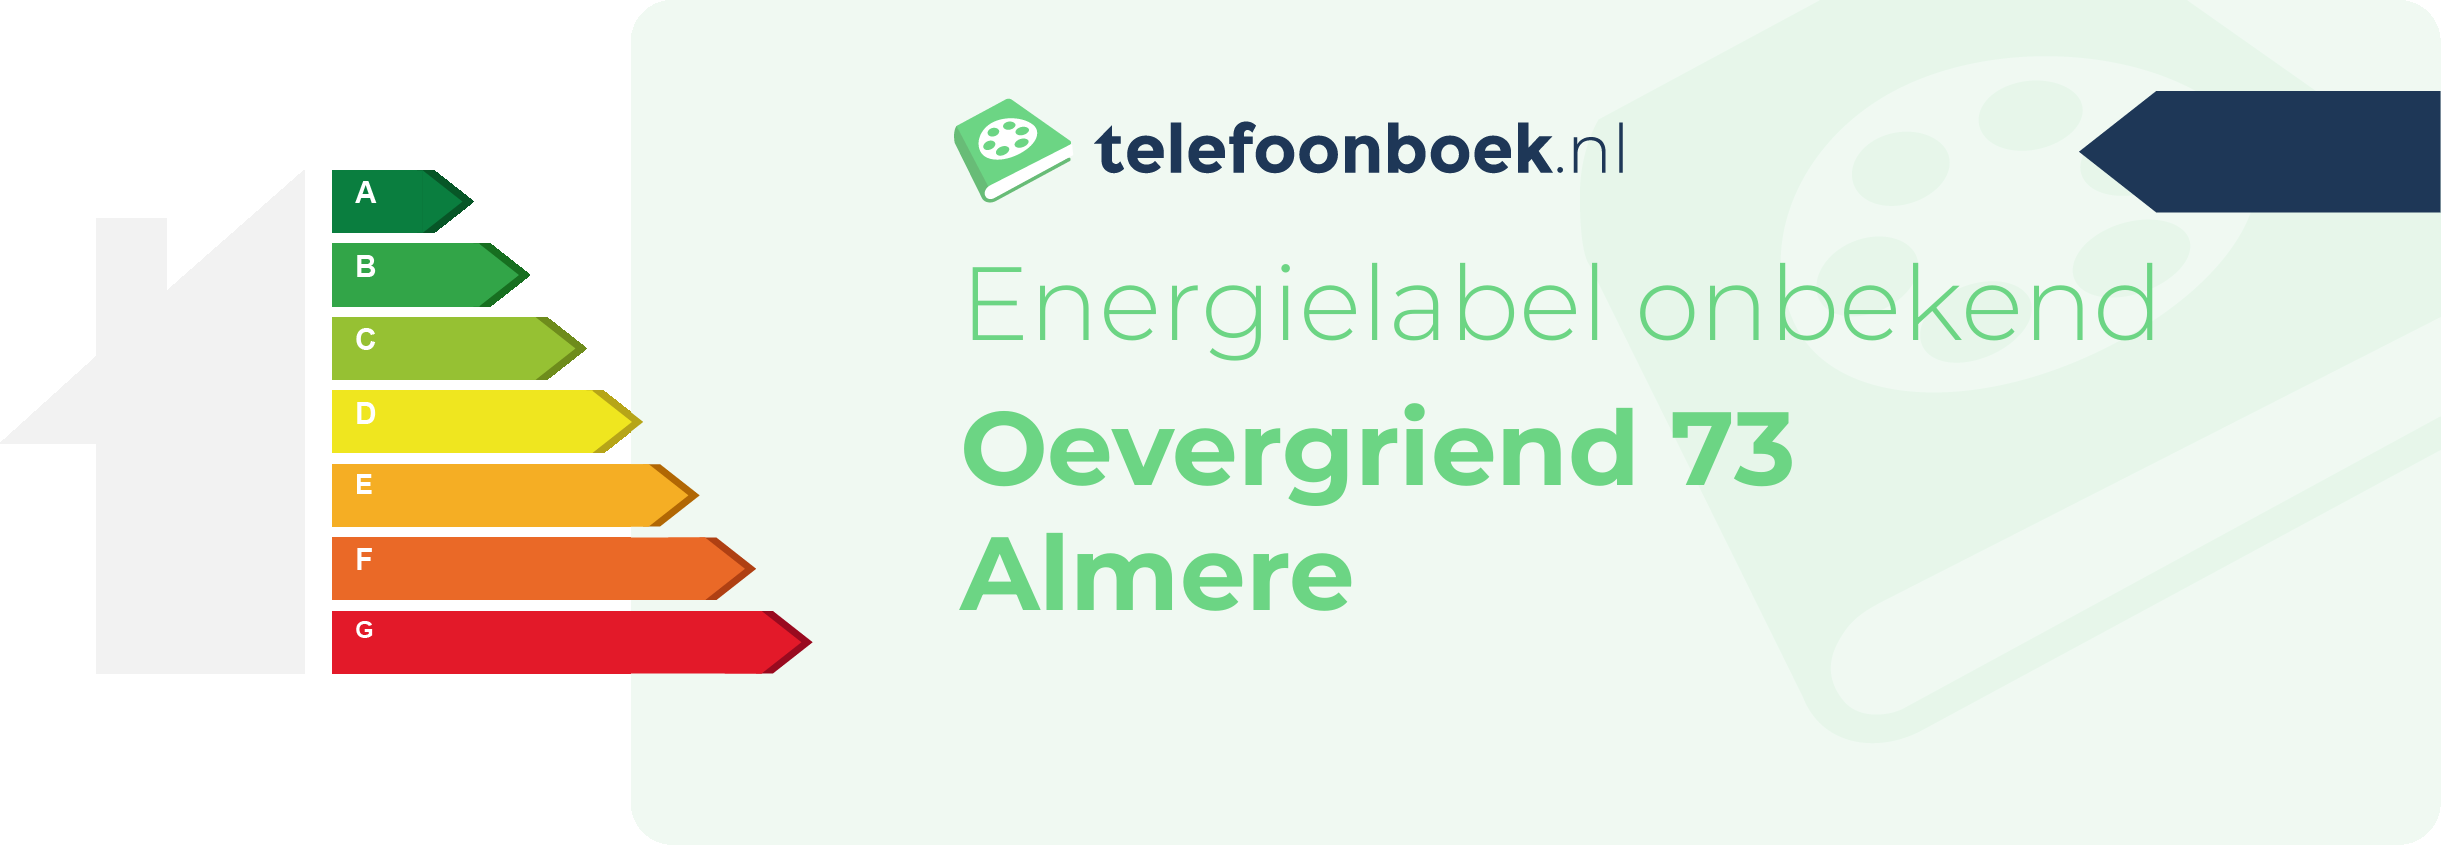 Energielabel Oevergriend 73 Almere